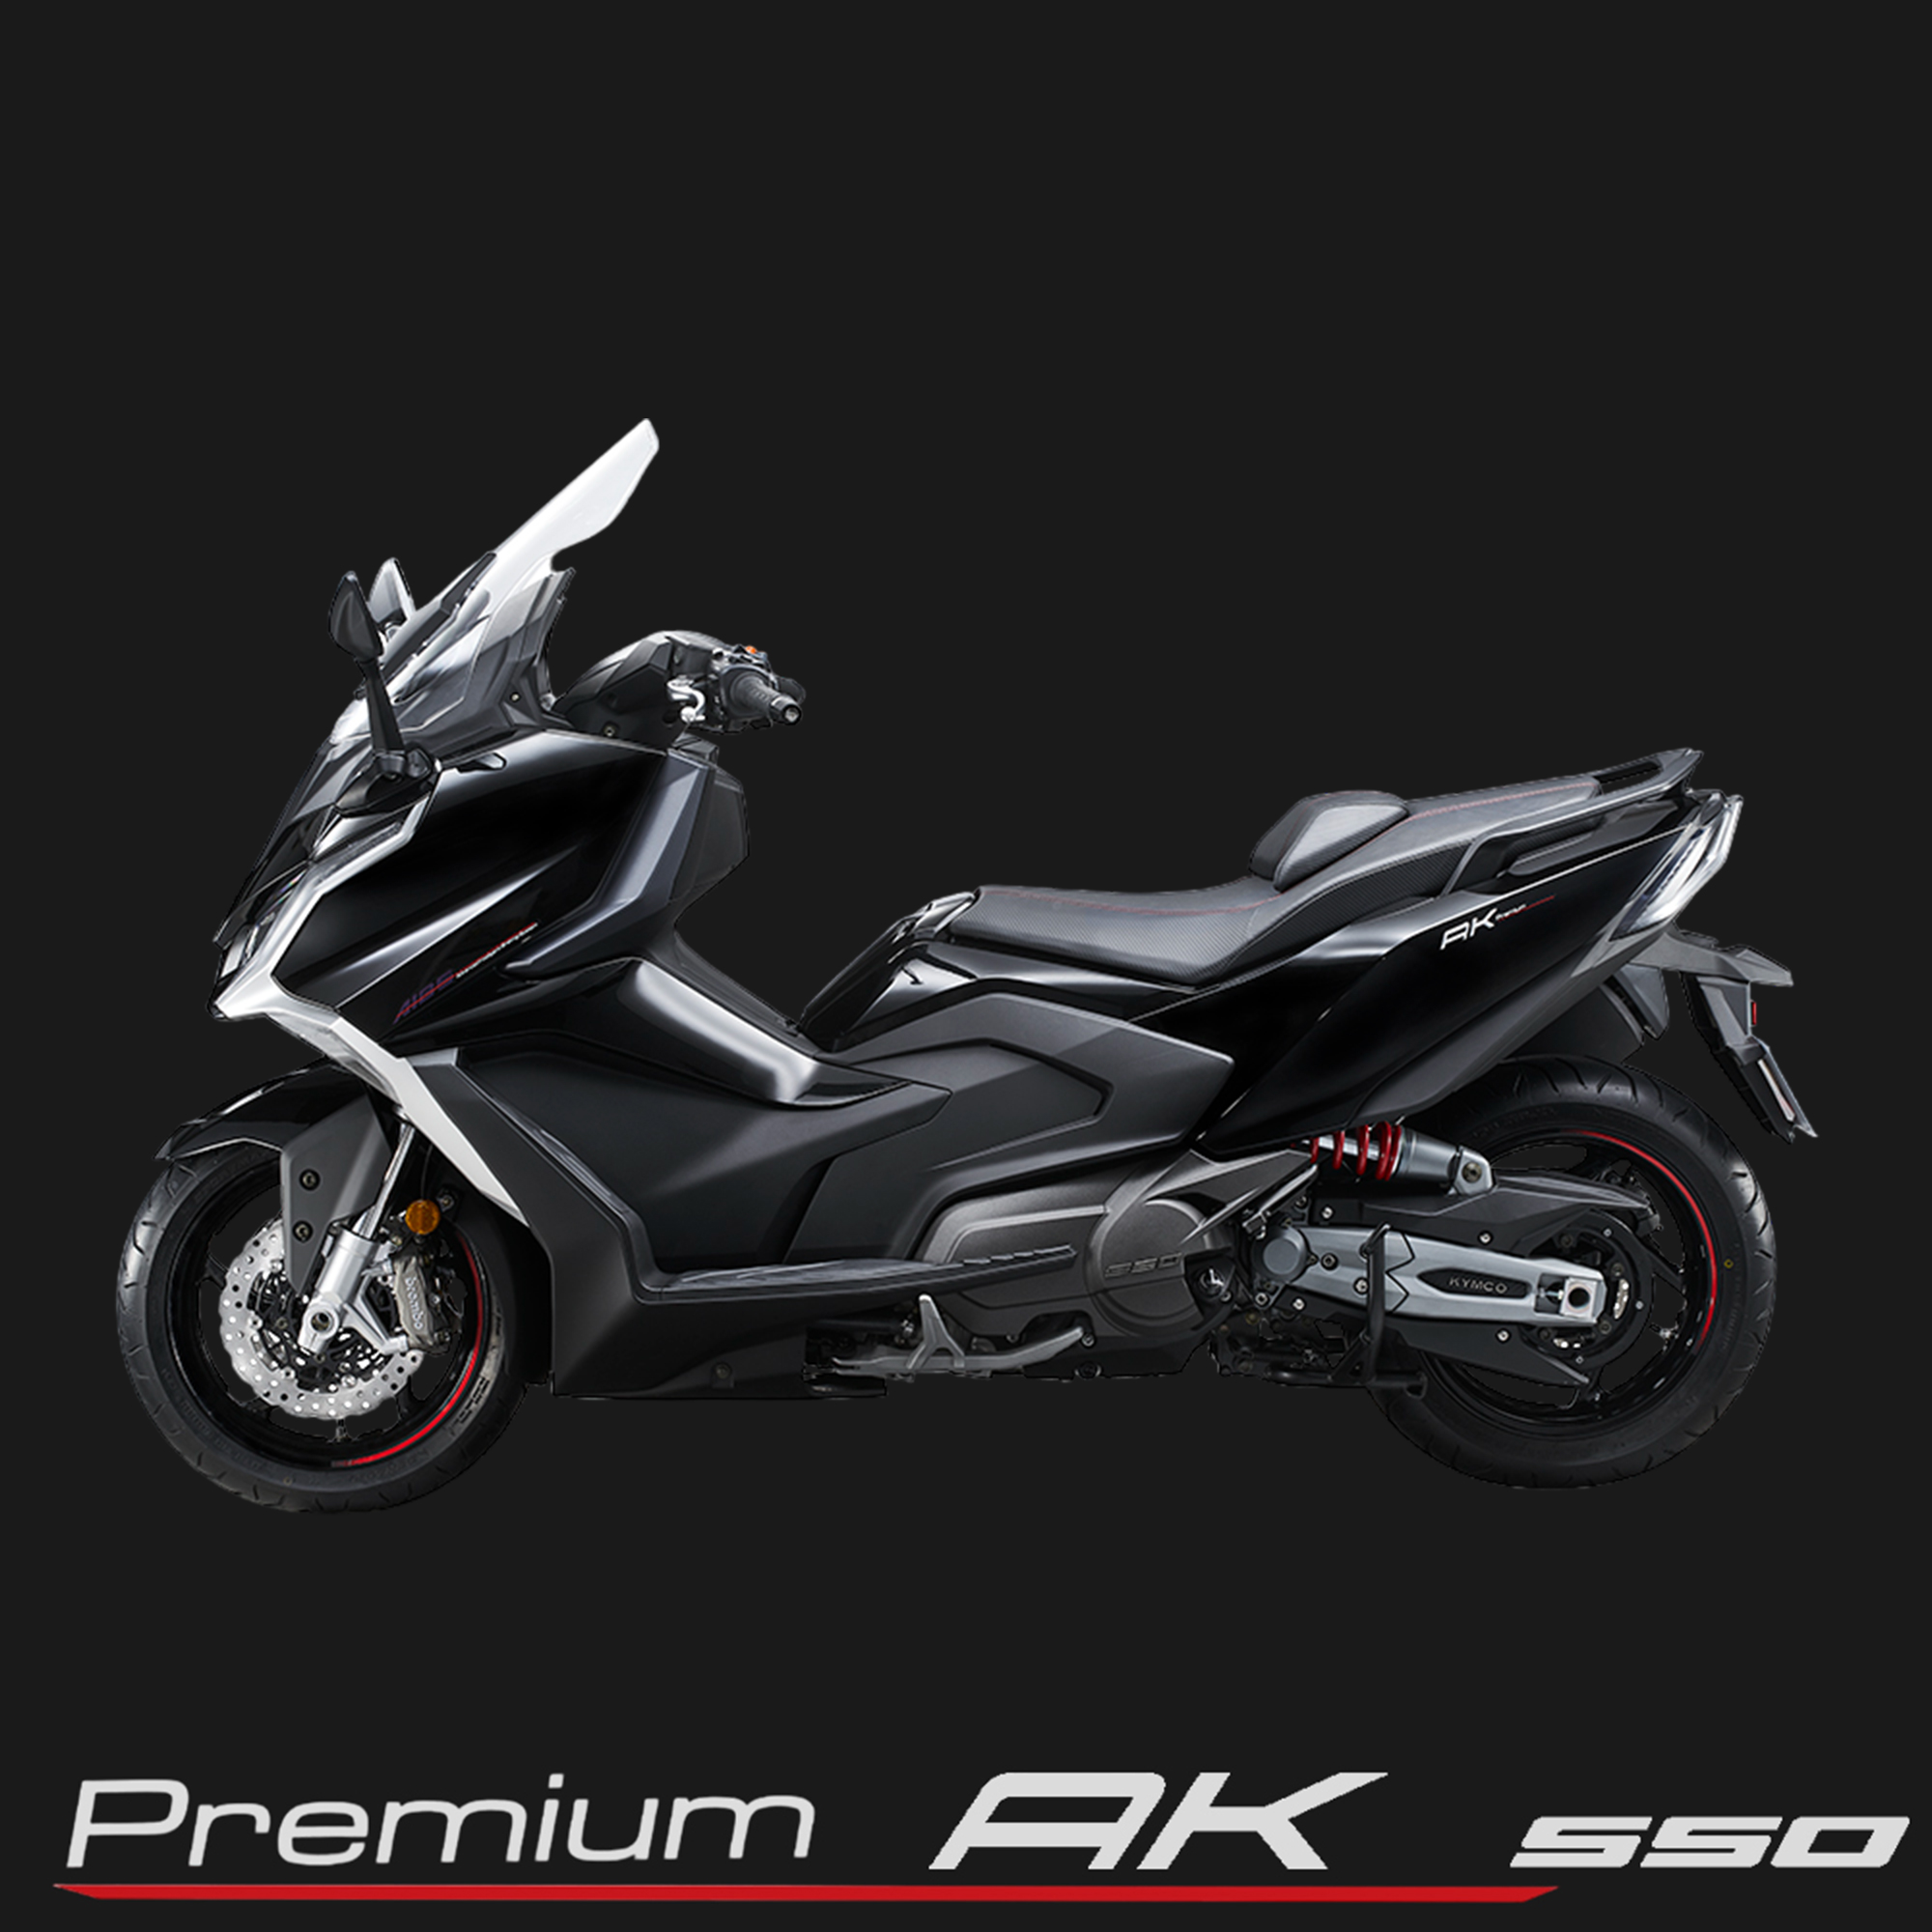 Motor - skuter Kymco AK 550 Premium - 550cc